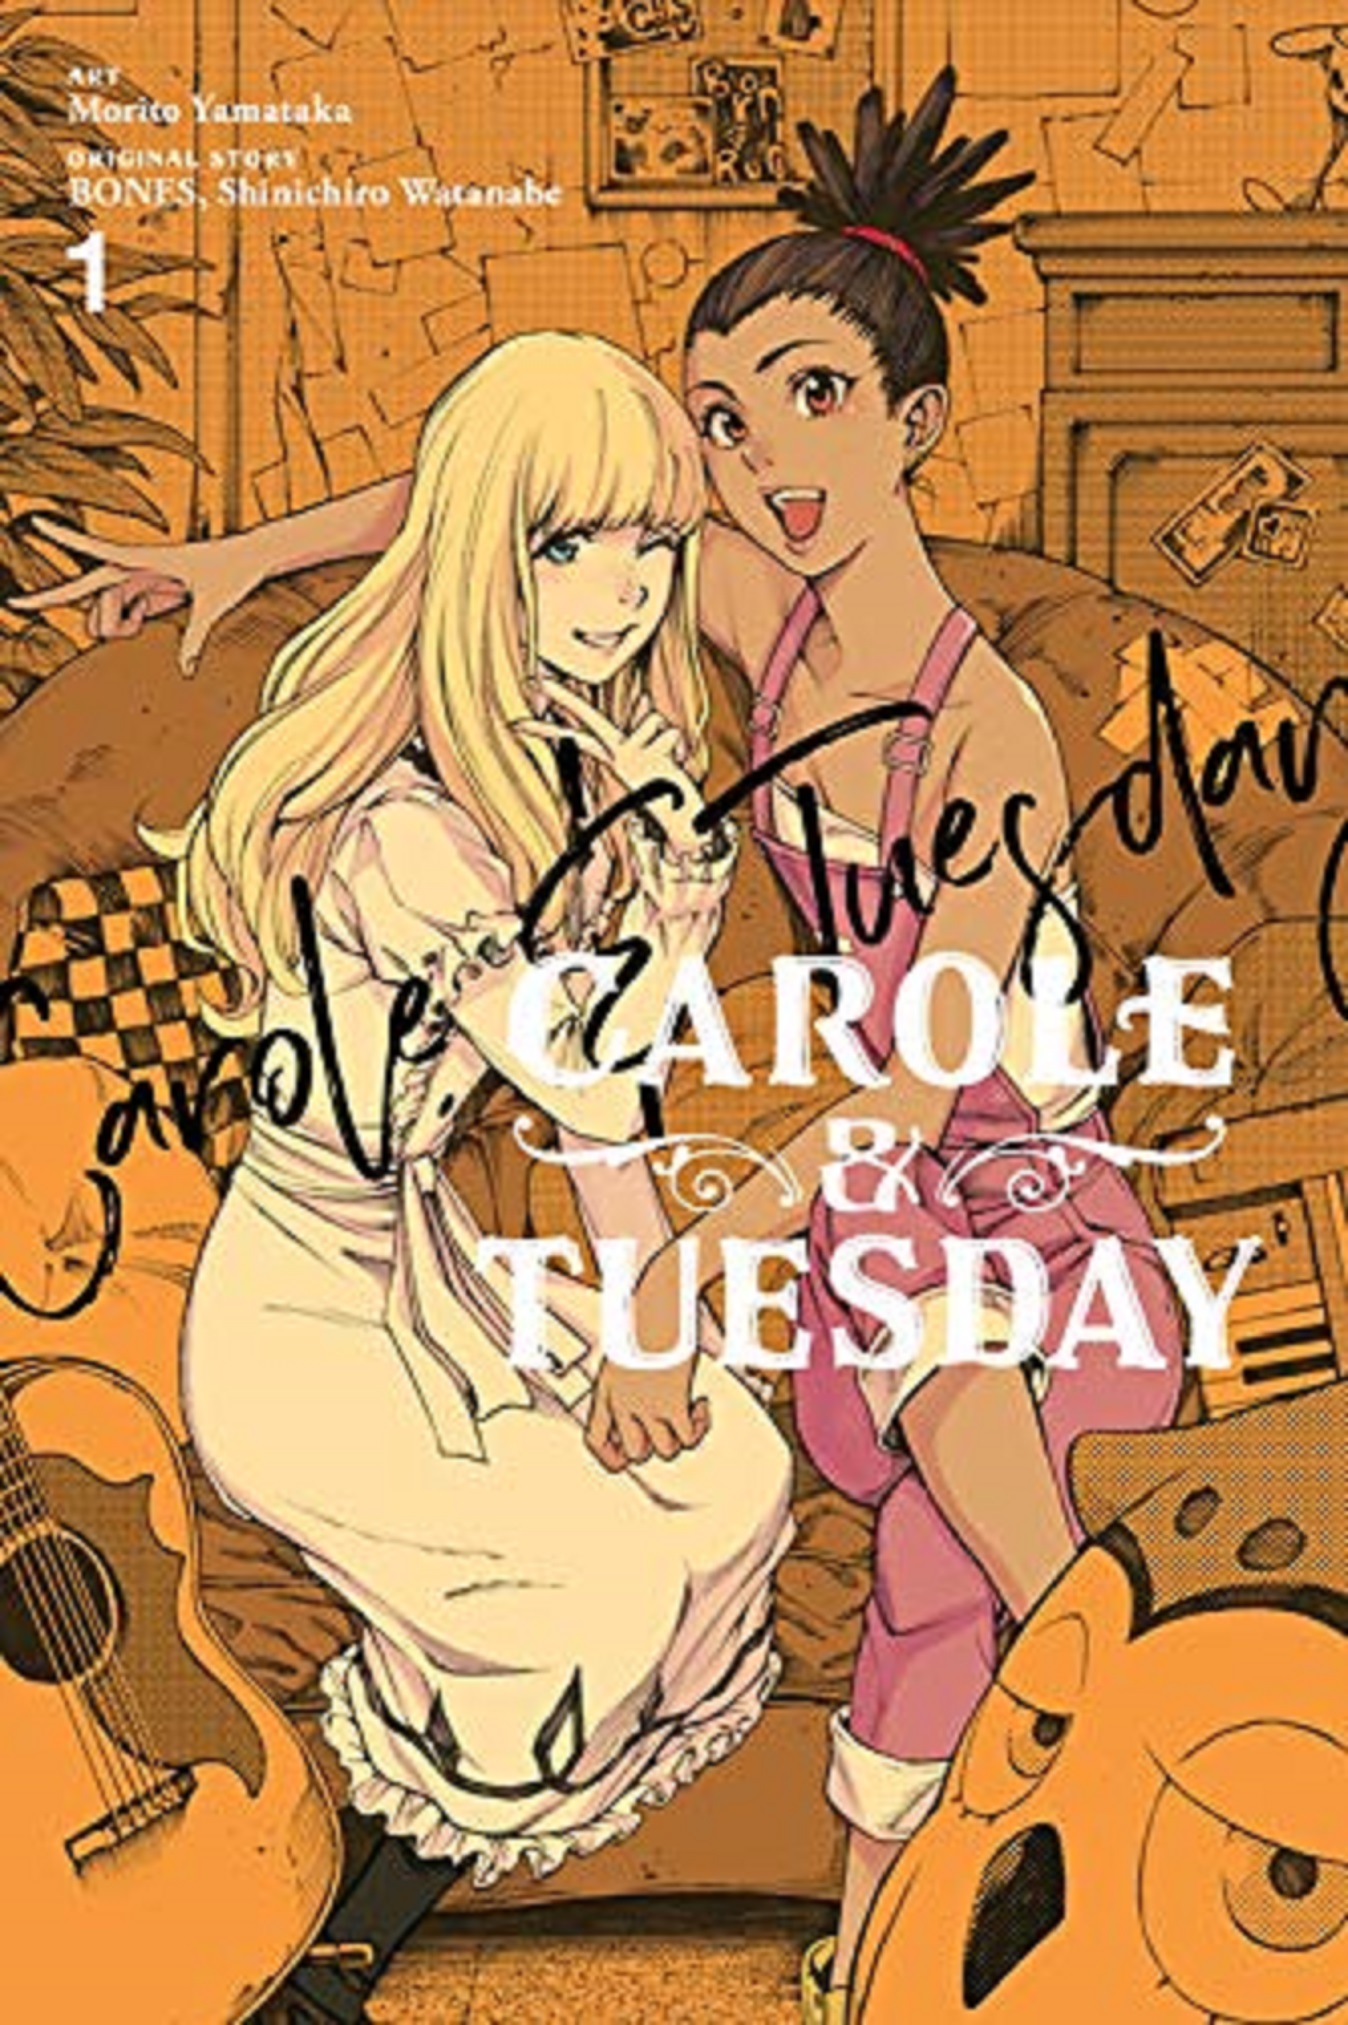 Carole & Tuesday | Bones, Shinichiro Watanabe